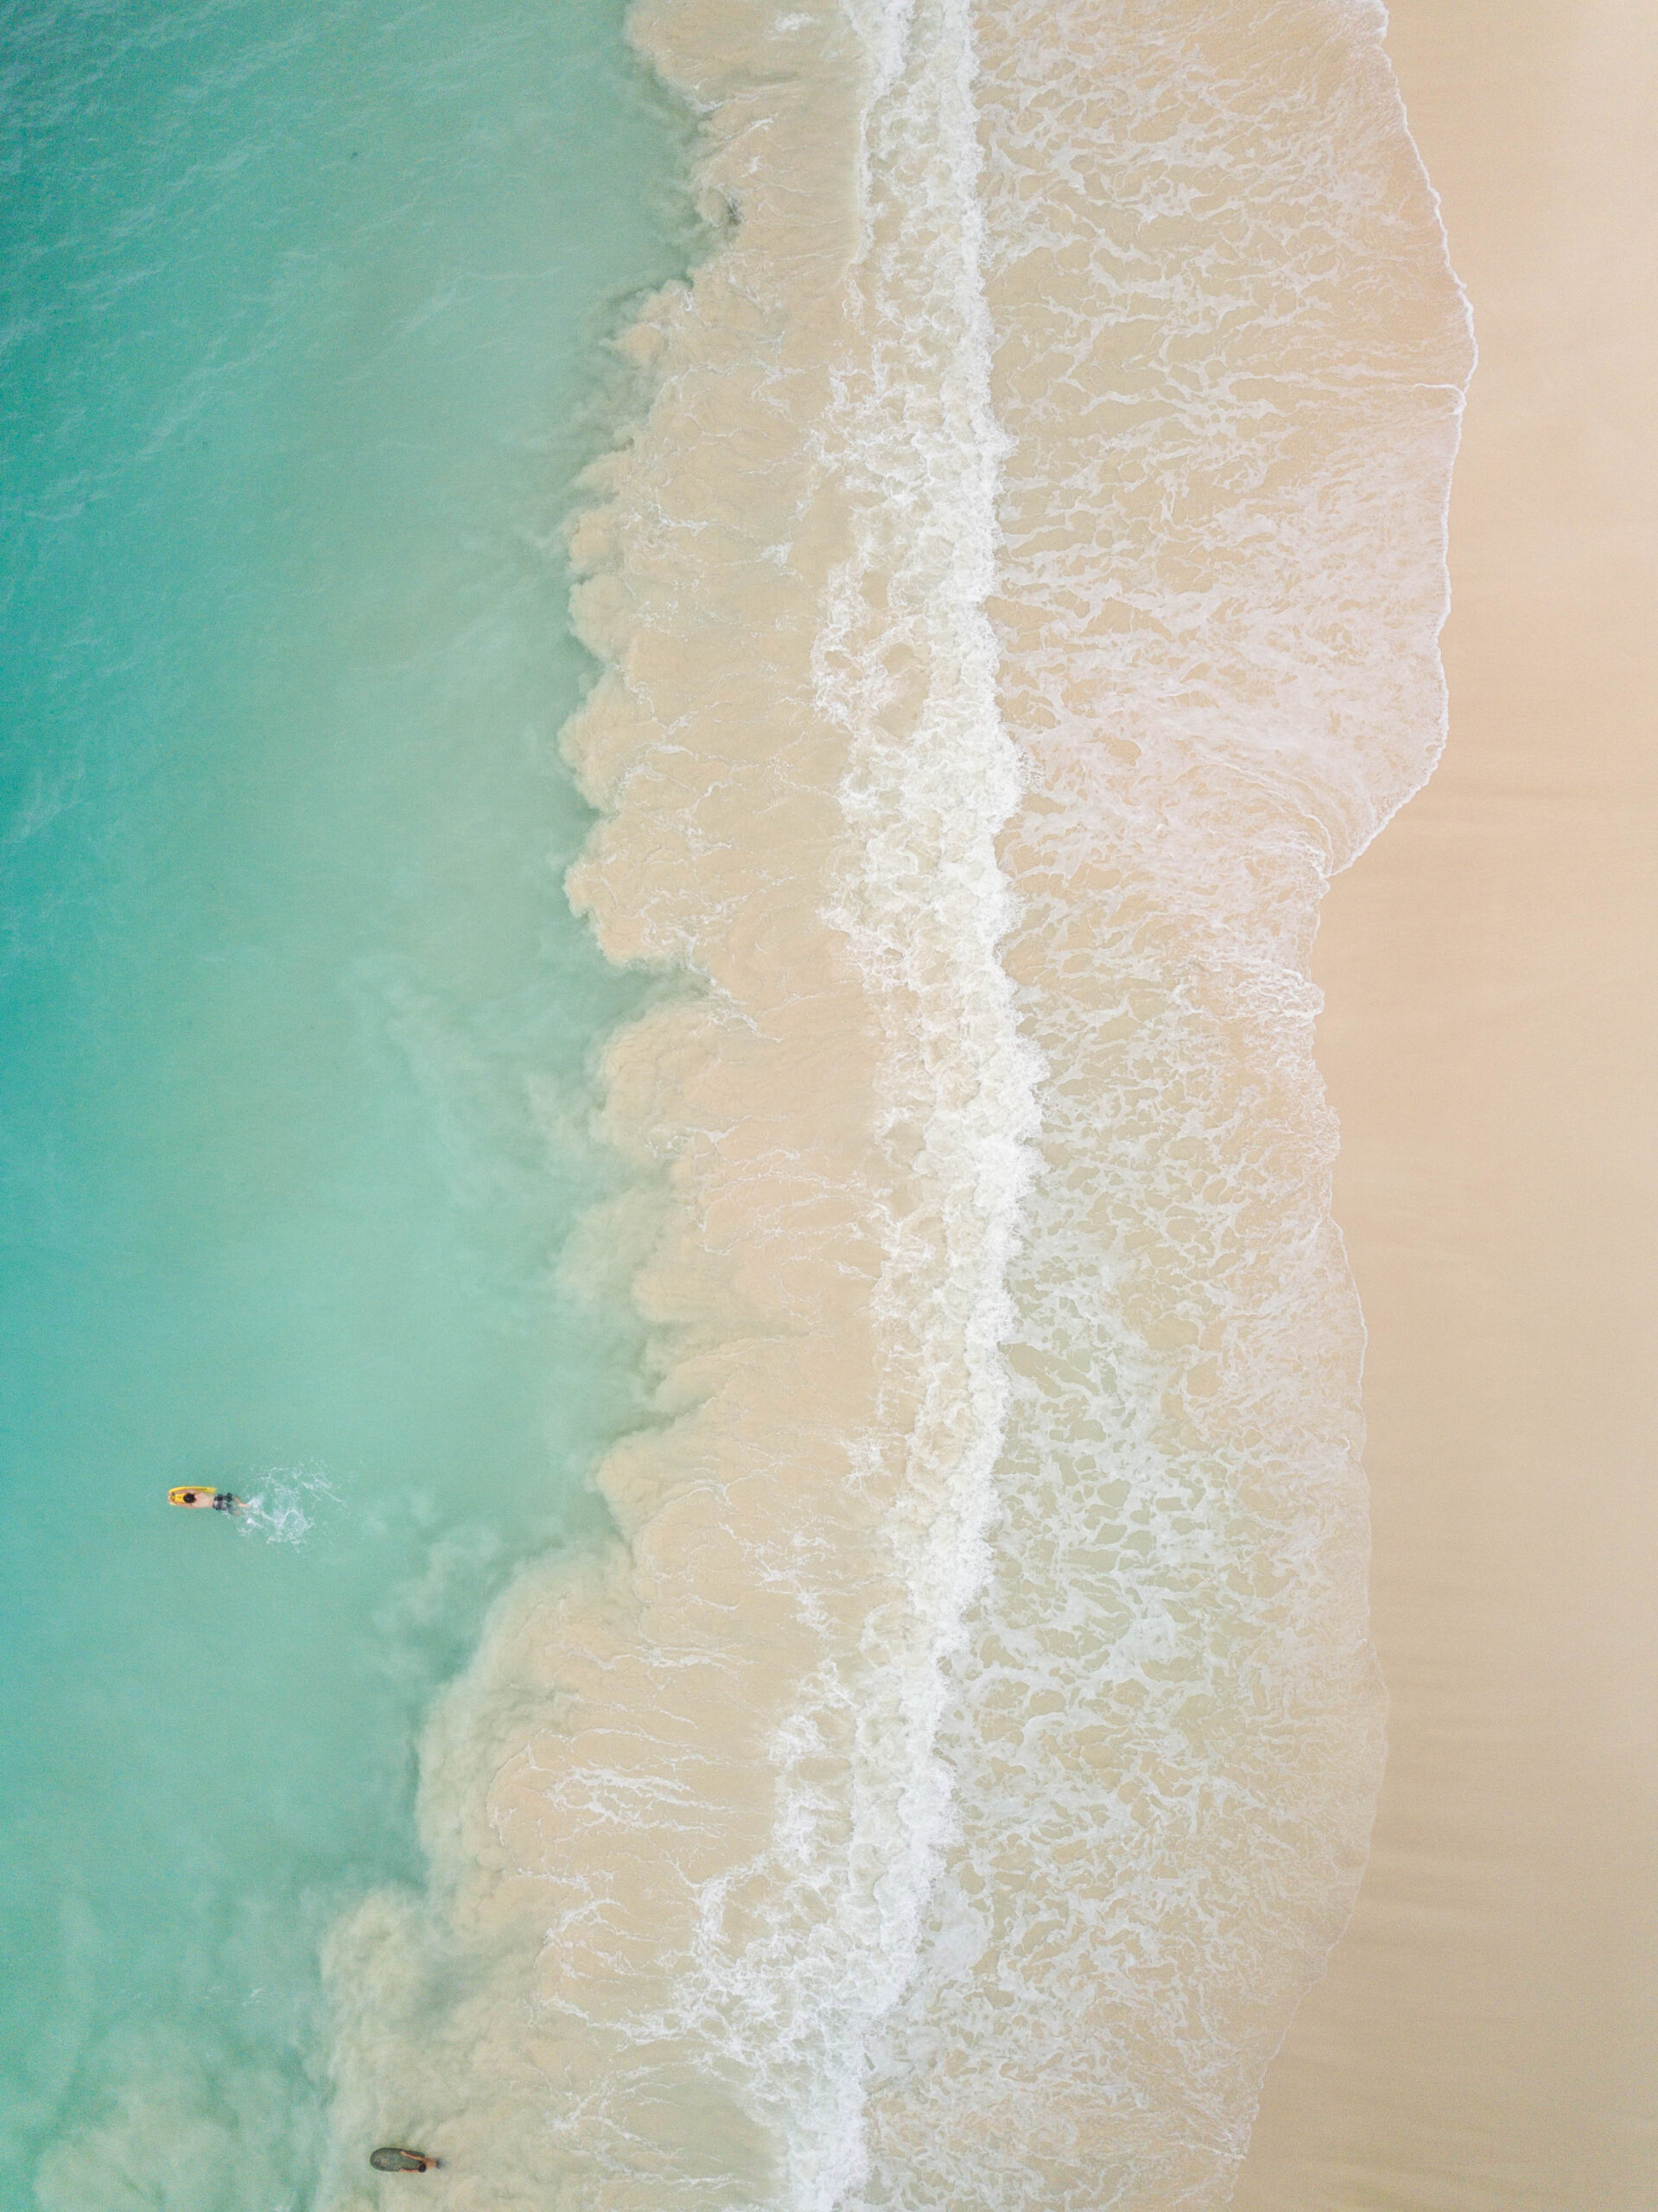 Aerial beach photograph of Waimanalo Beach - White sand with turquoise ocean